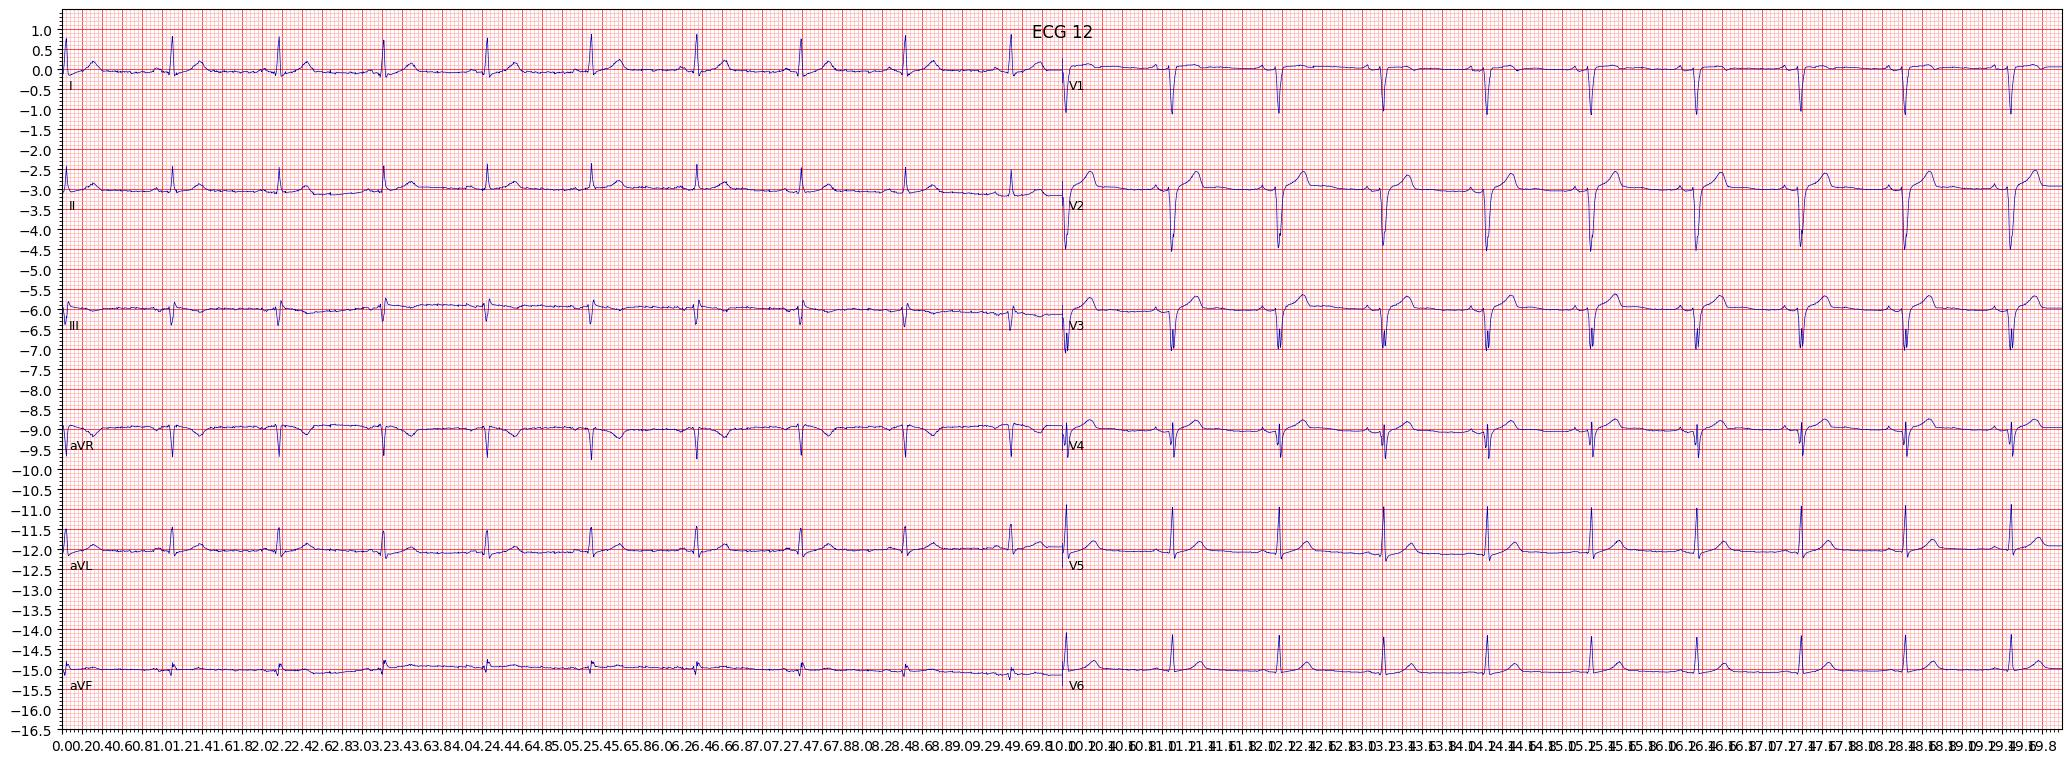 anteroseptal myocardial infarction (ASMI) example 1441